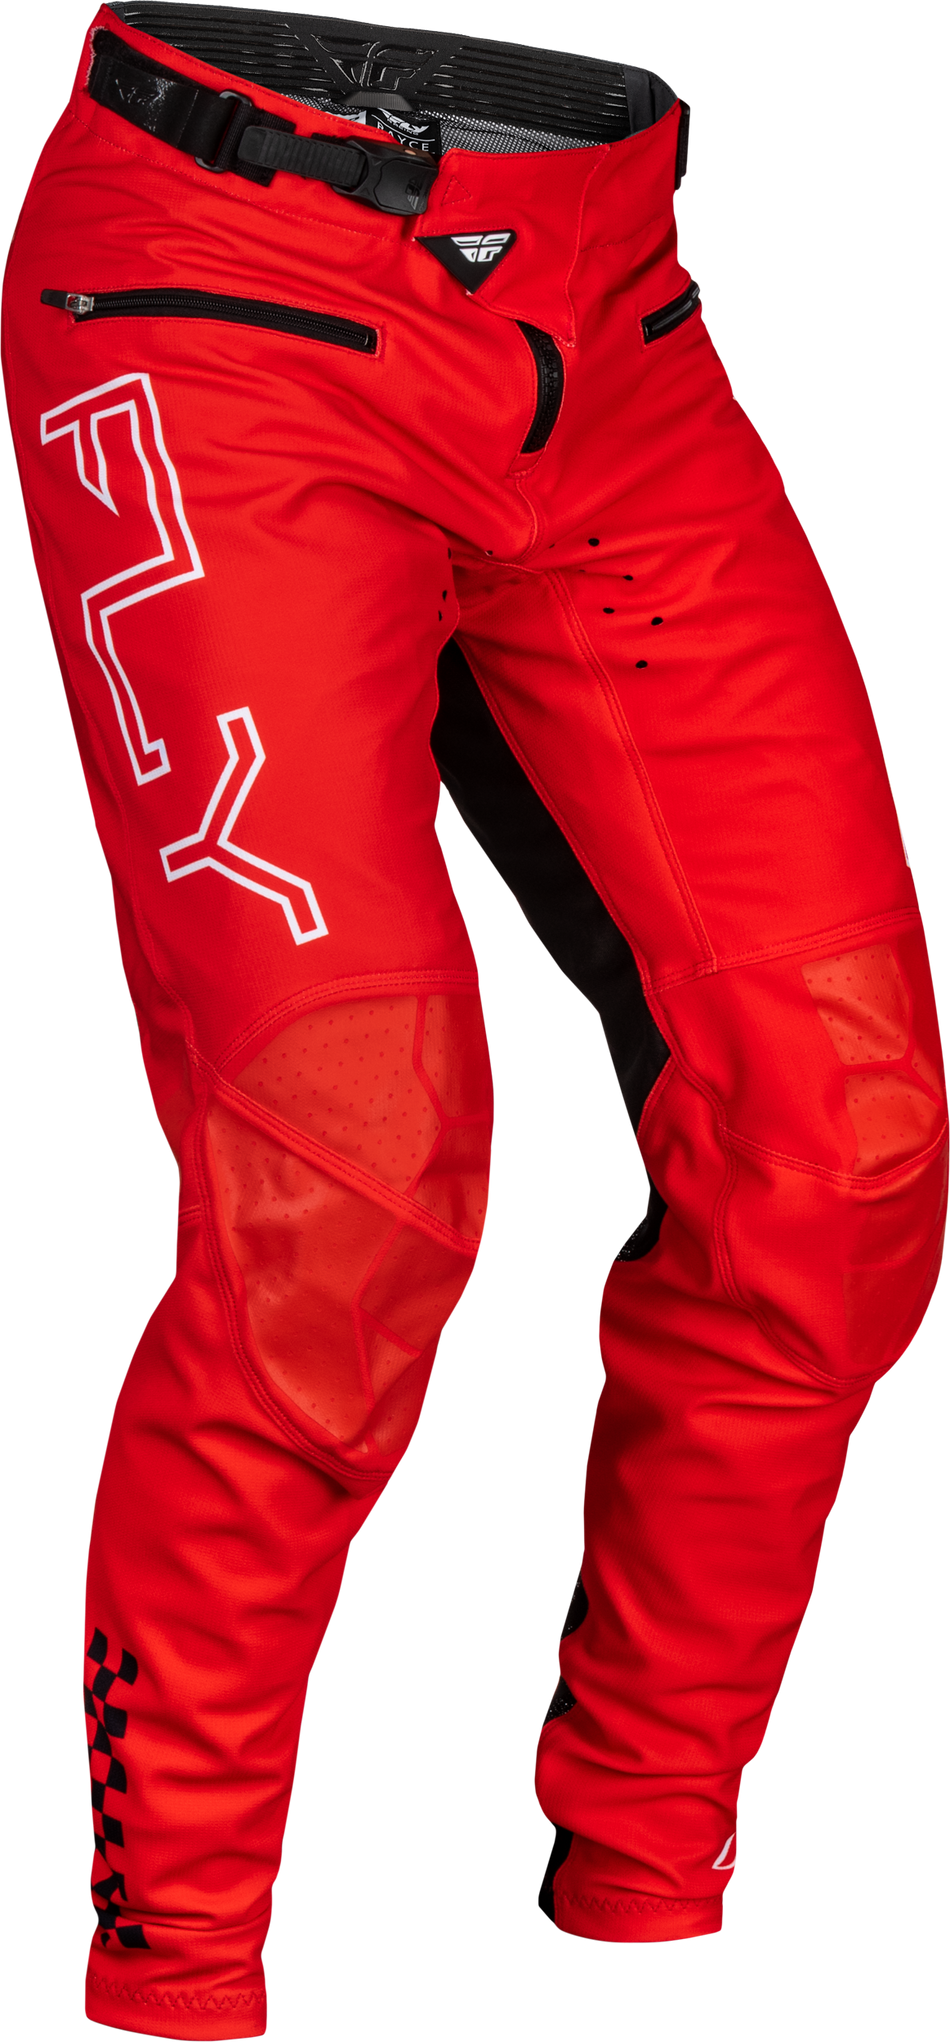 FLY RACING Rayce Bicycle Pants Red Sz 34 377-06334